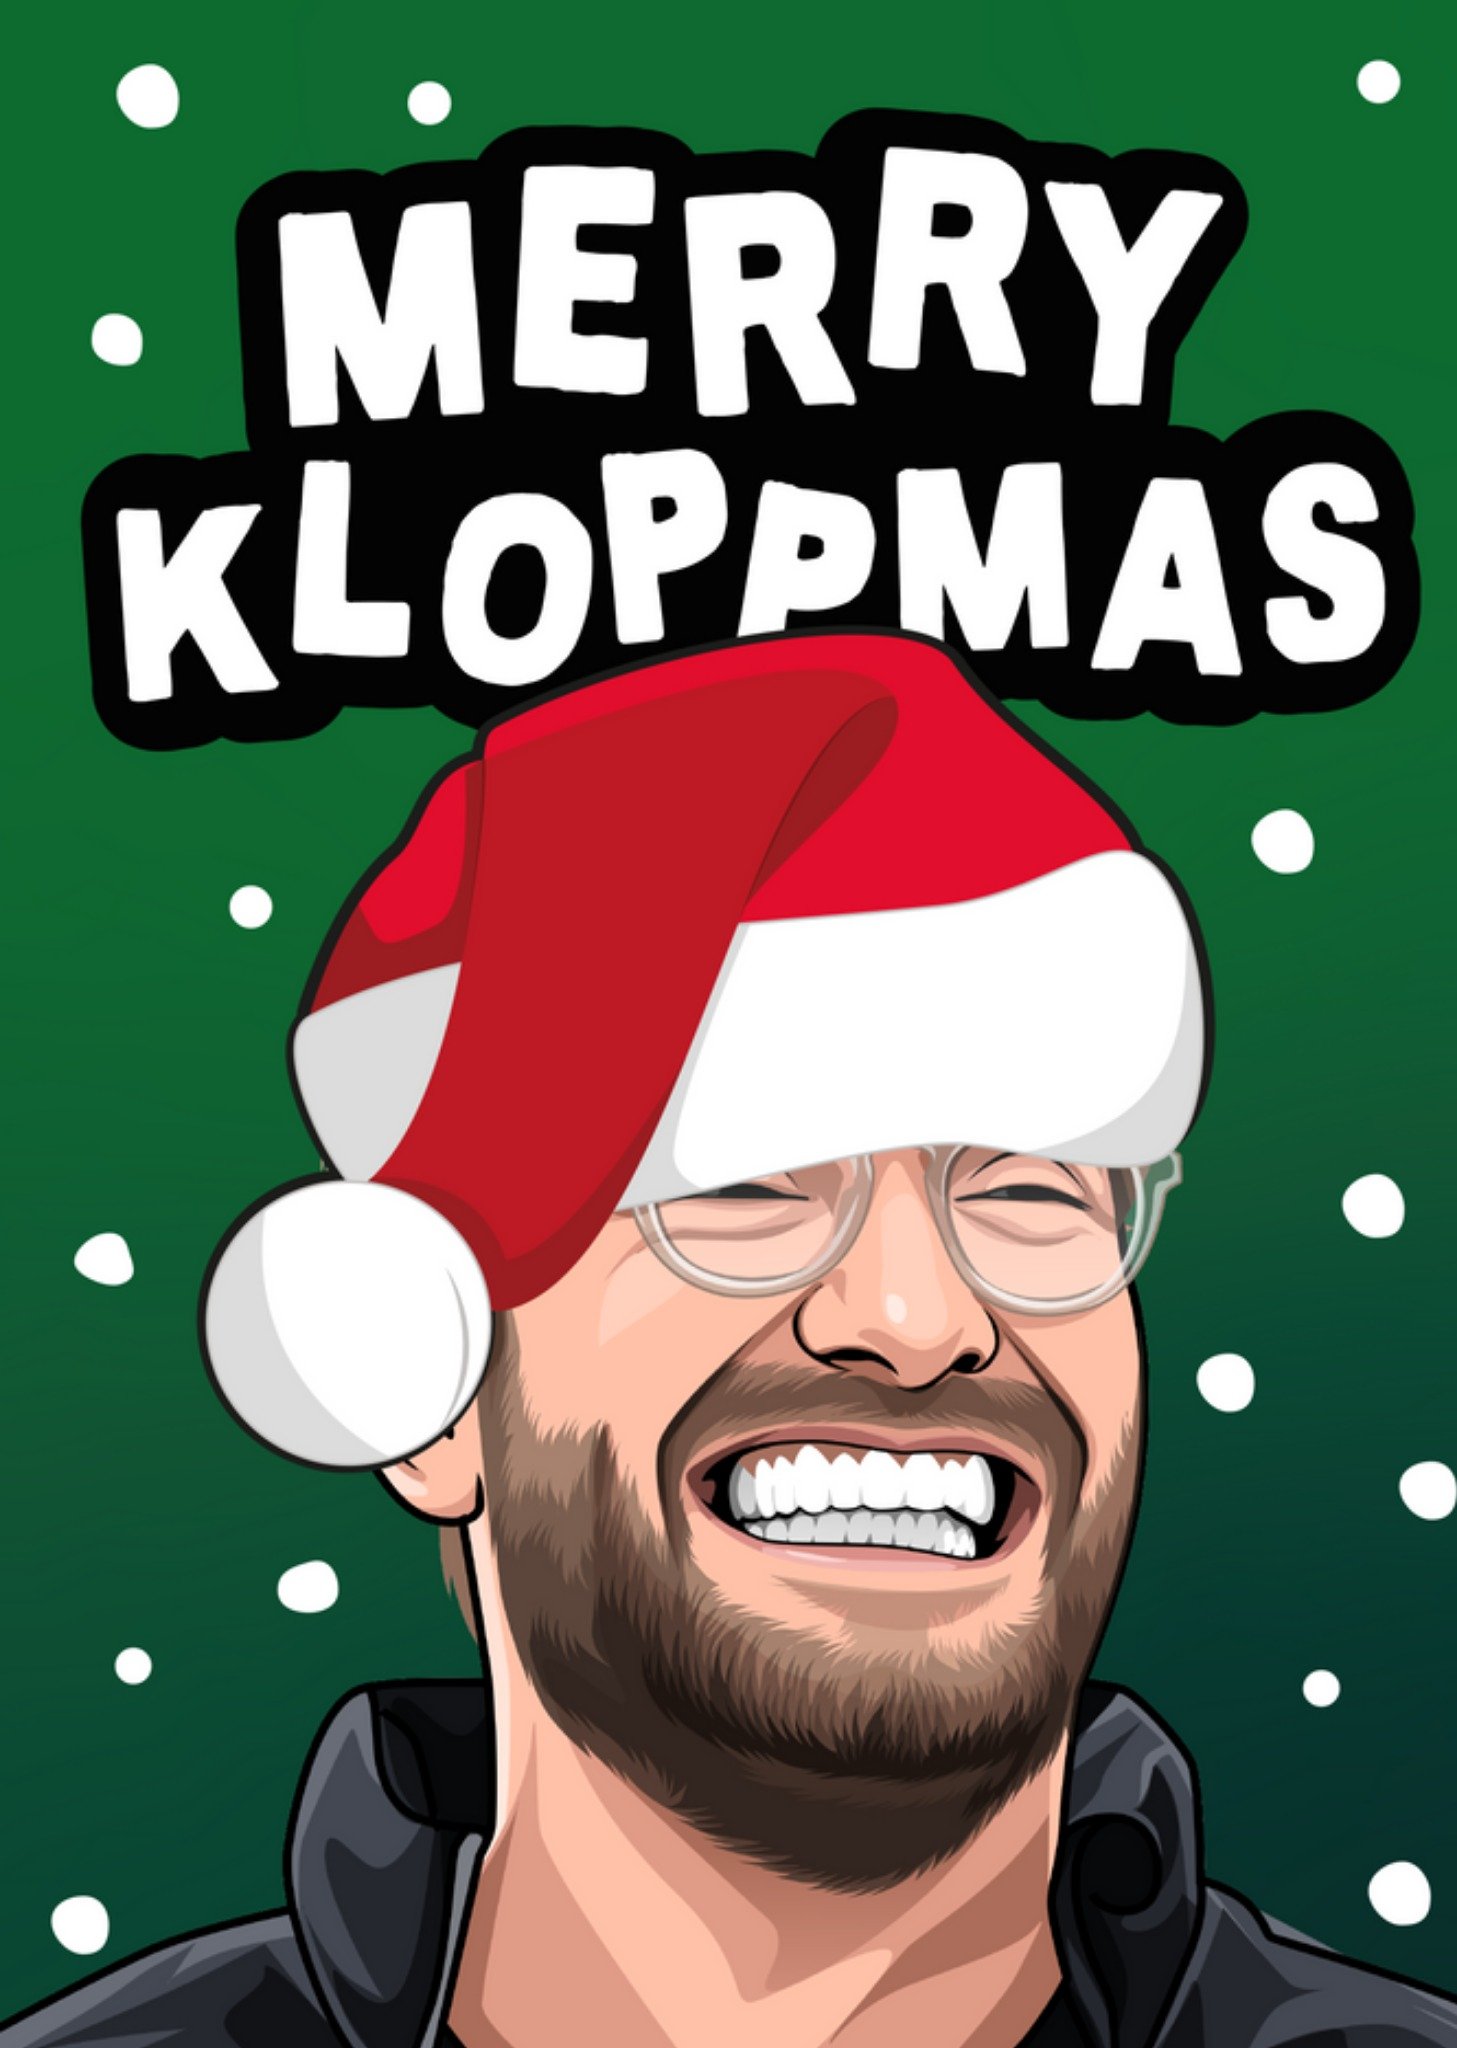 Moonpig Funny Pun Topical Football Merry Christmas Card, Large